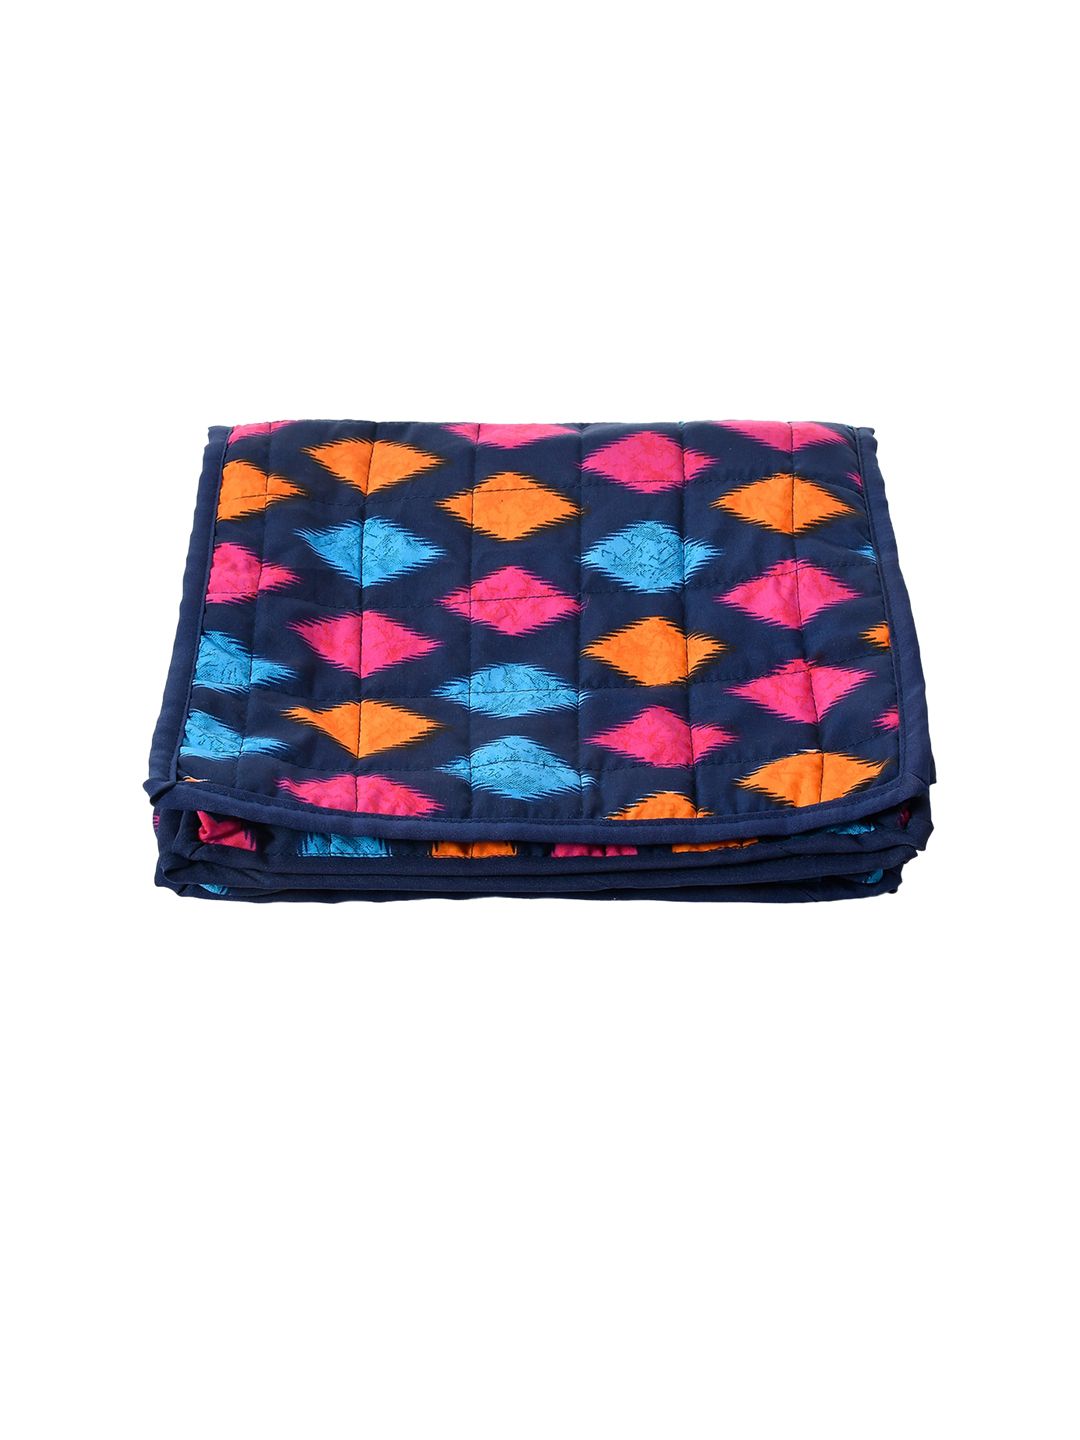 Kuber Industries Blue & Pink  Printed Cotton Undergarments Storage Bag Price in India